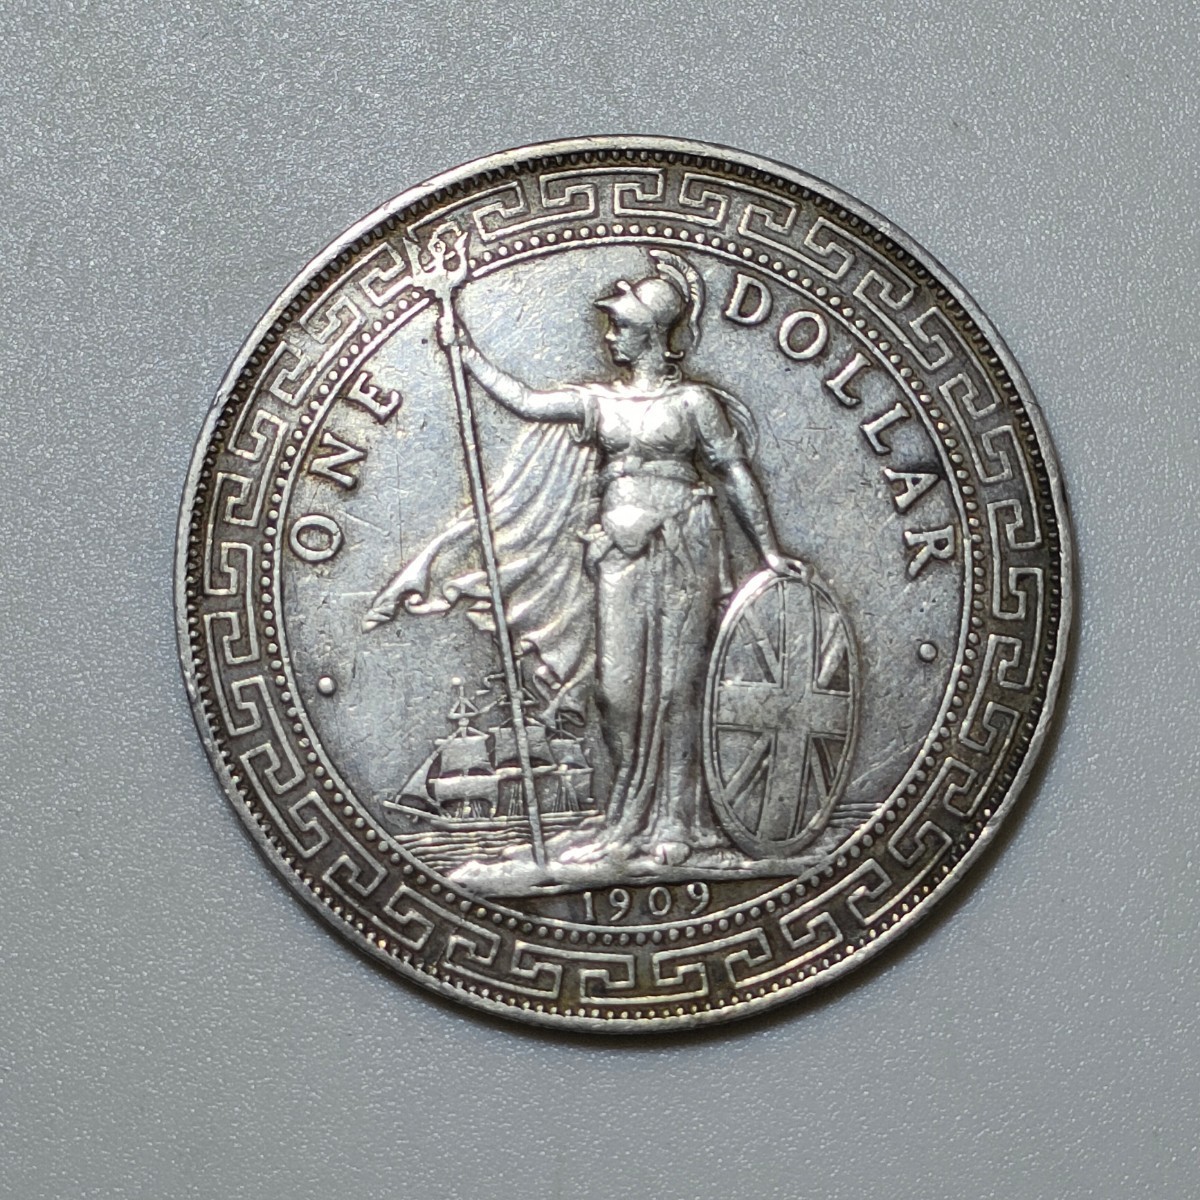 銀貨イギリス貿易銀香港壹圓1909年発行1ドル銀貨重量約26.8g | JChere